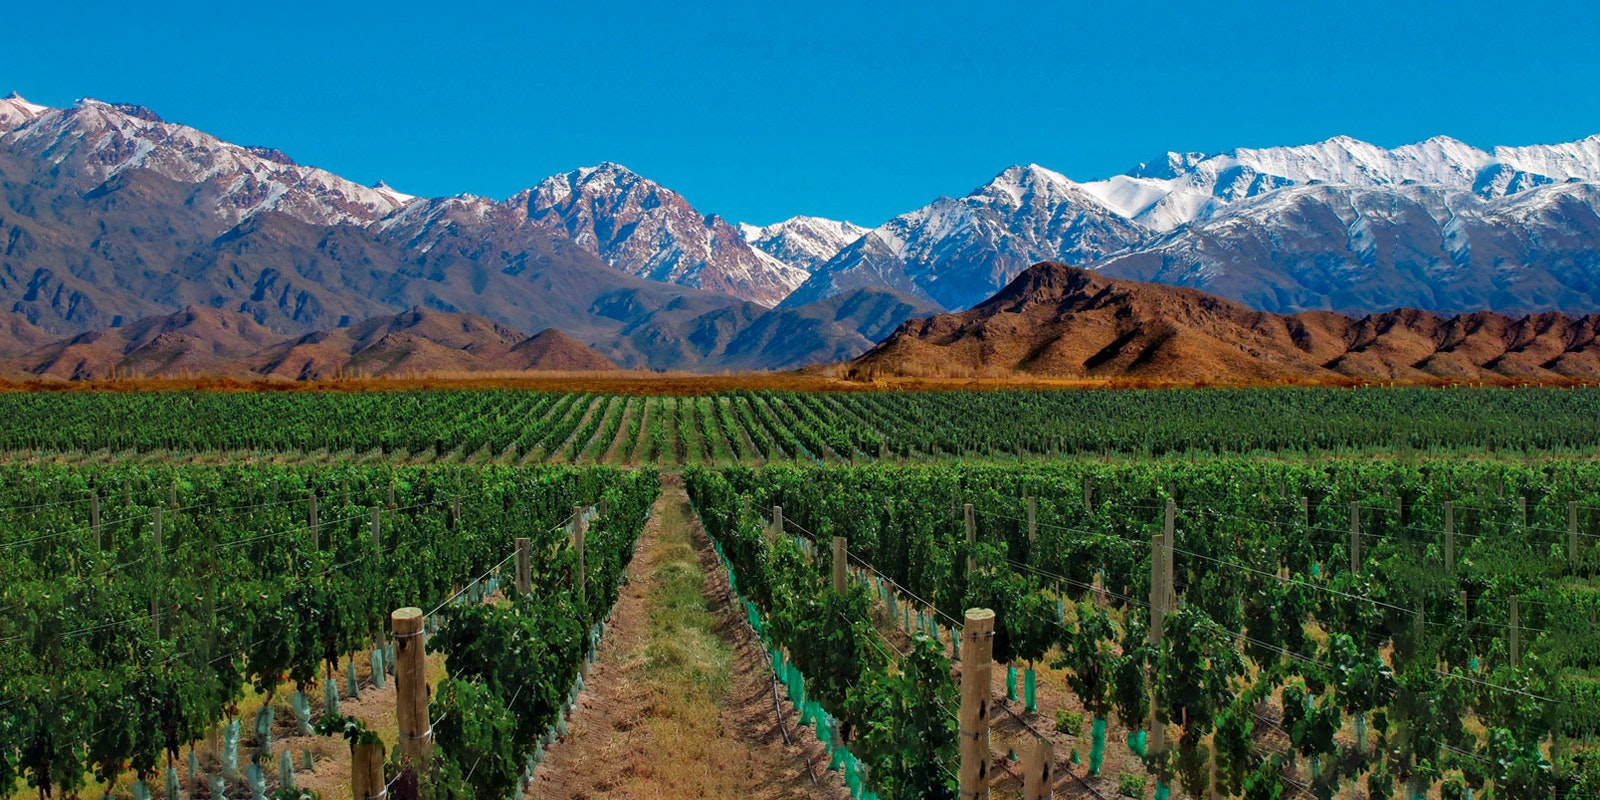 Vineyard growing in Argentina